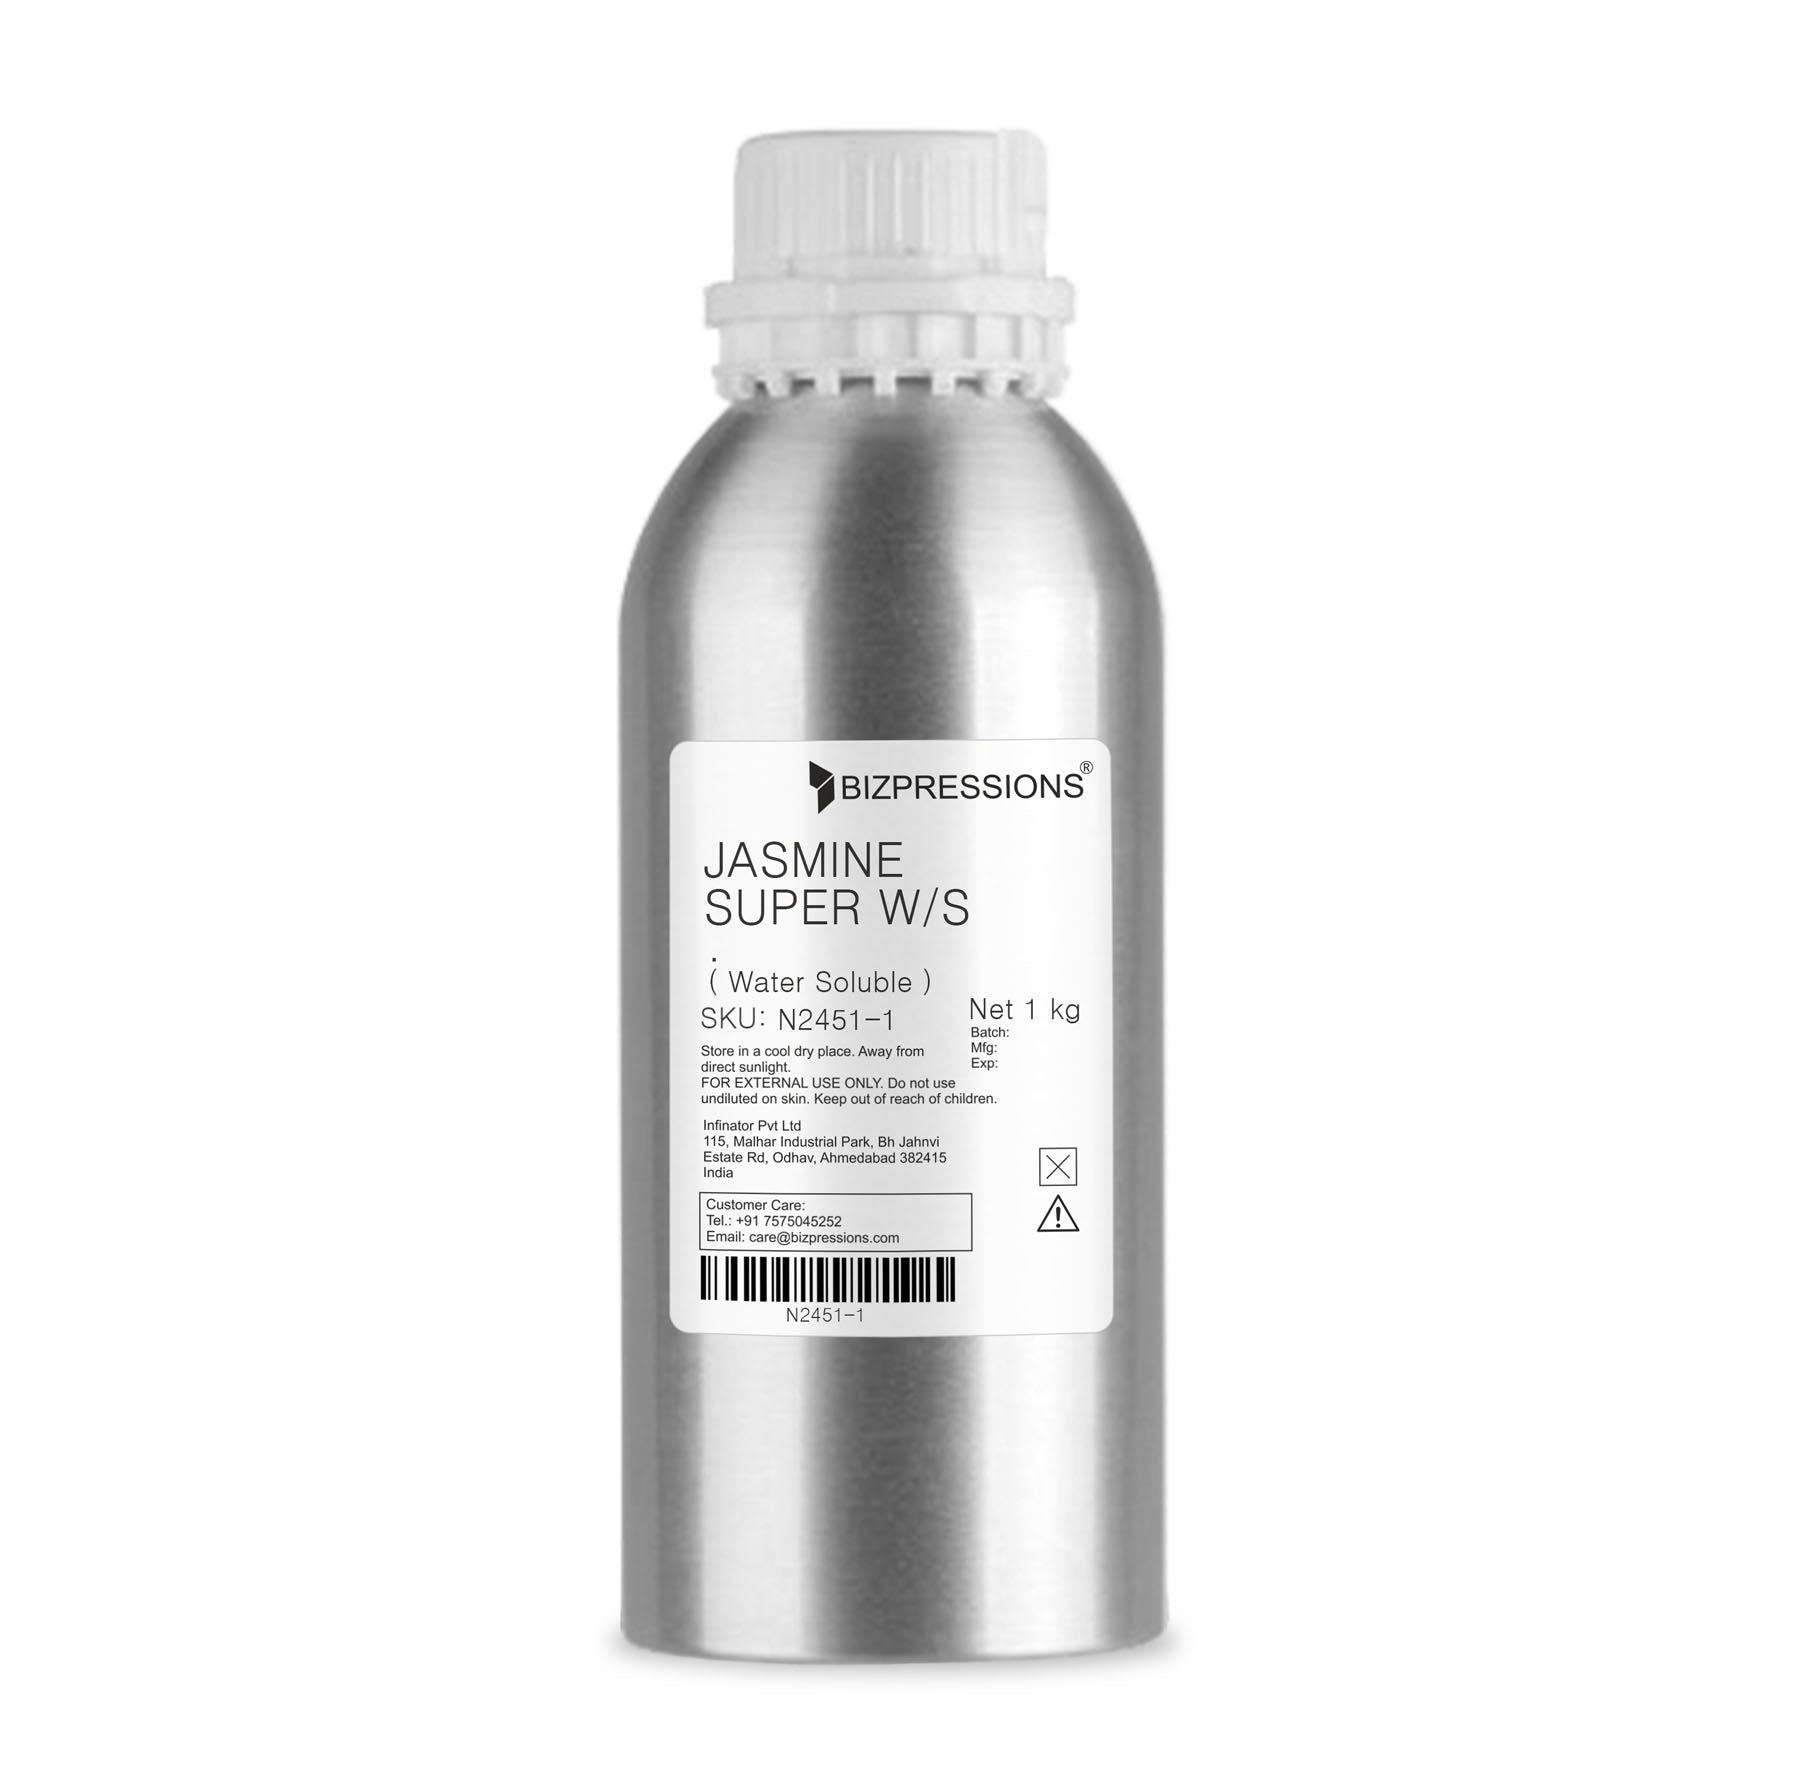 JASMINE SUPER W/S - Fragrance ( Water Soluble ) - 1 kg